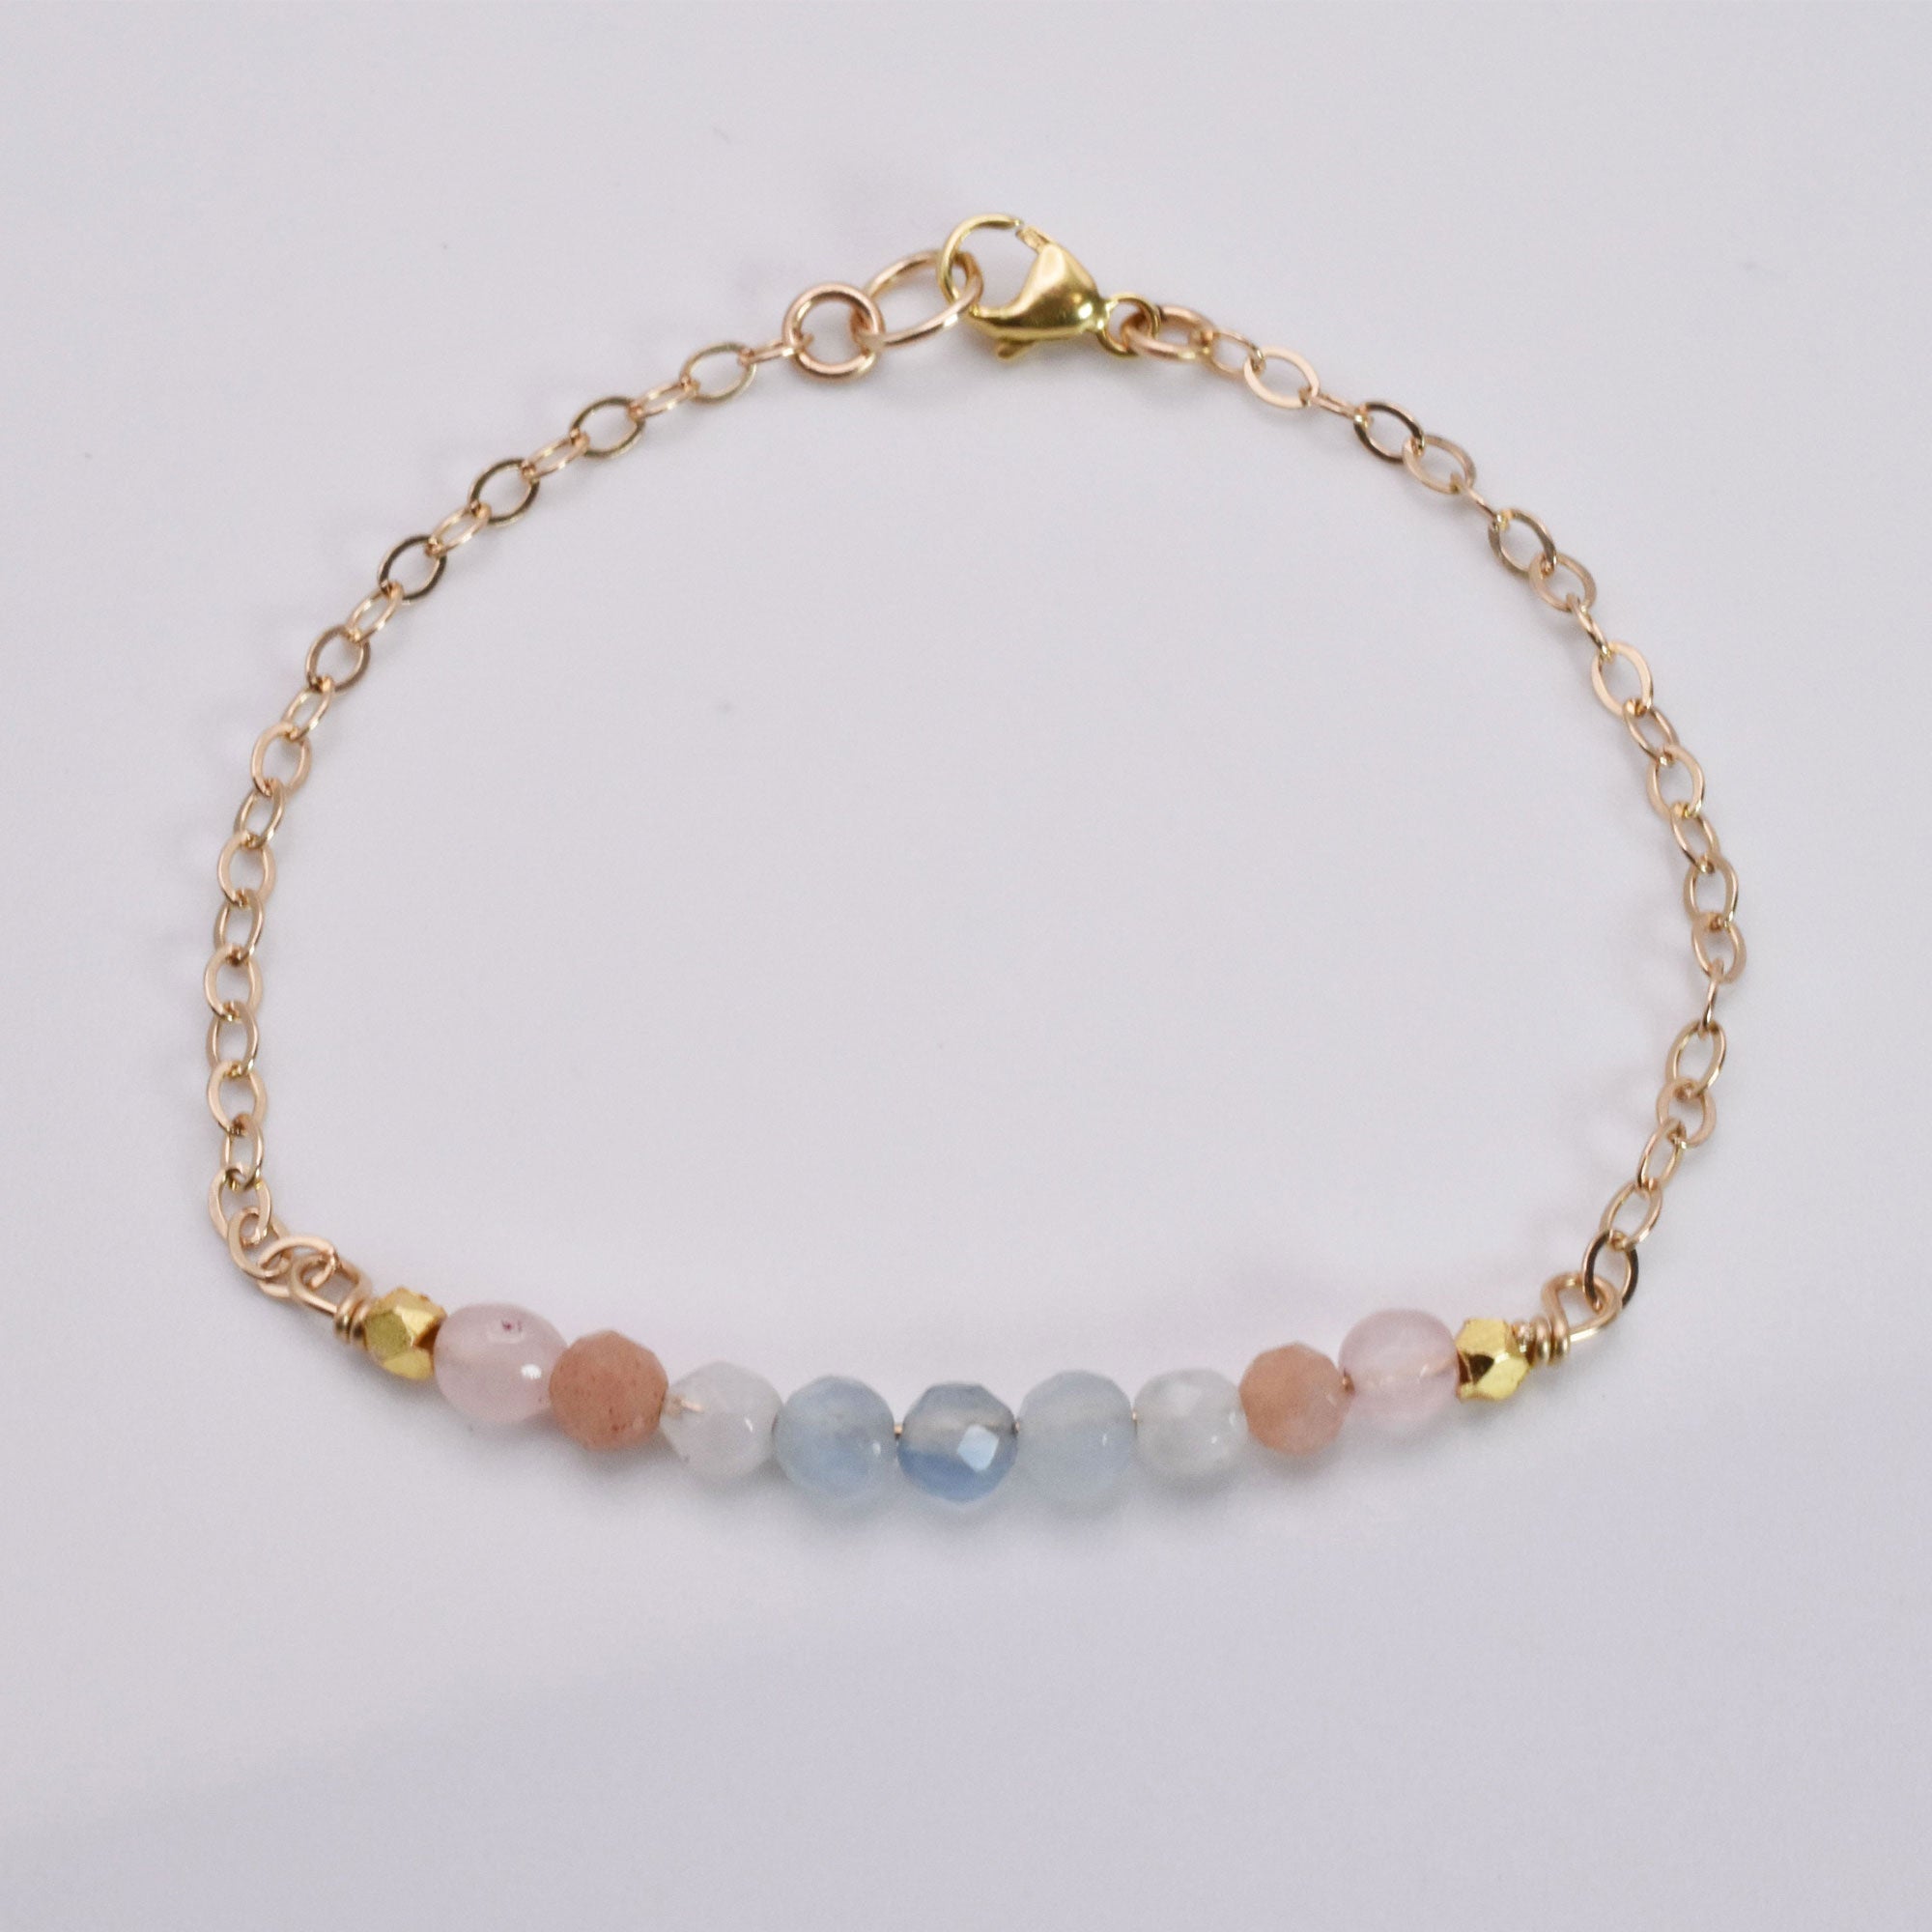 Minimalist Fertility Bracelet Featuring Rose Quartz, Aquamarine and Moonstone